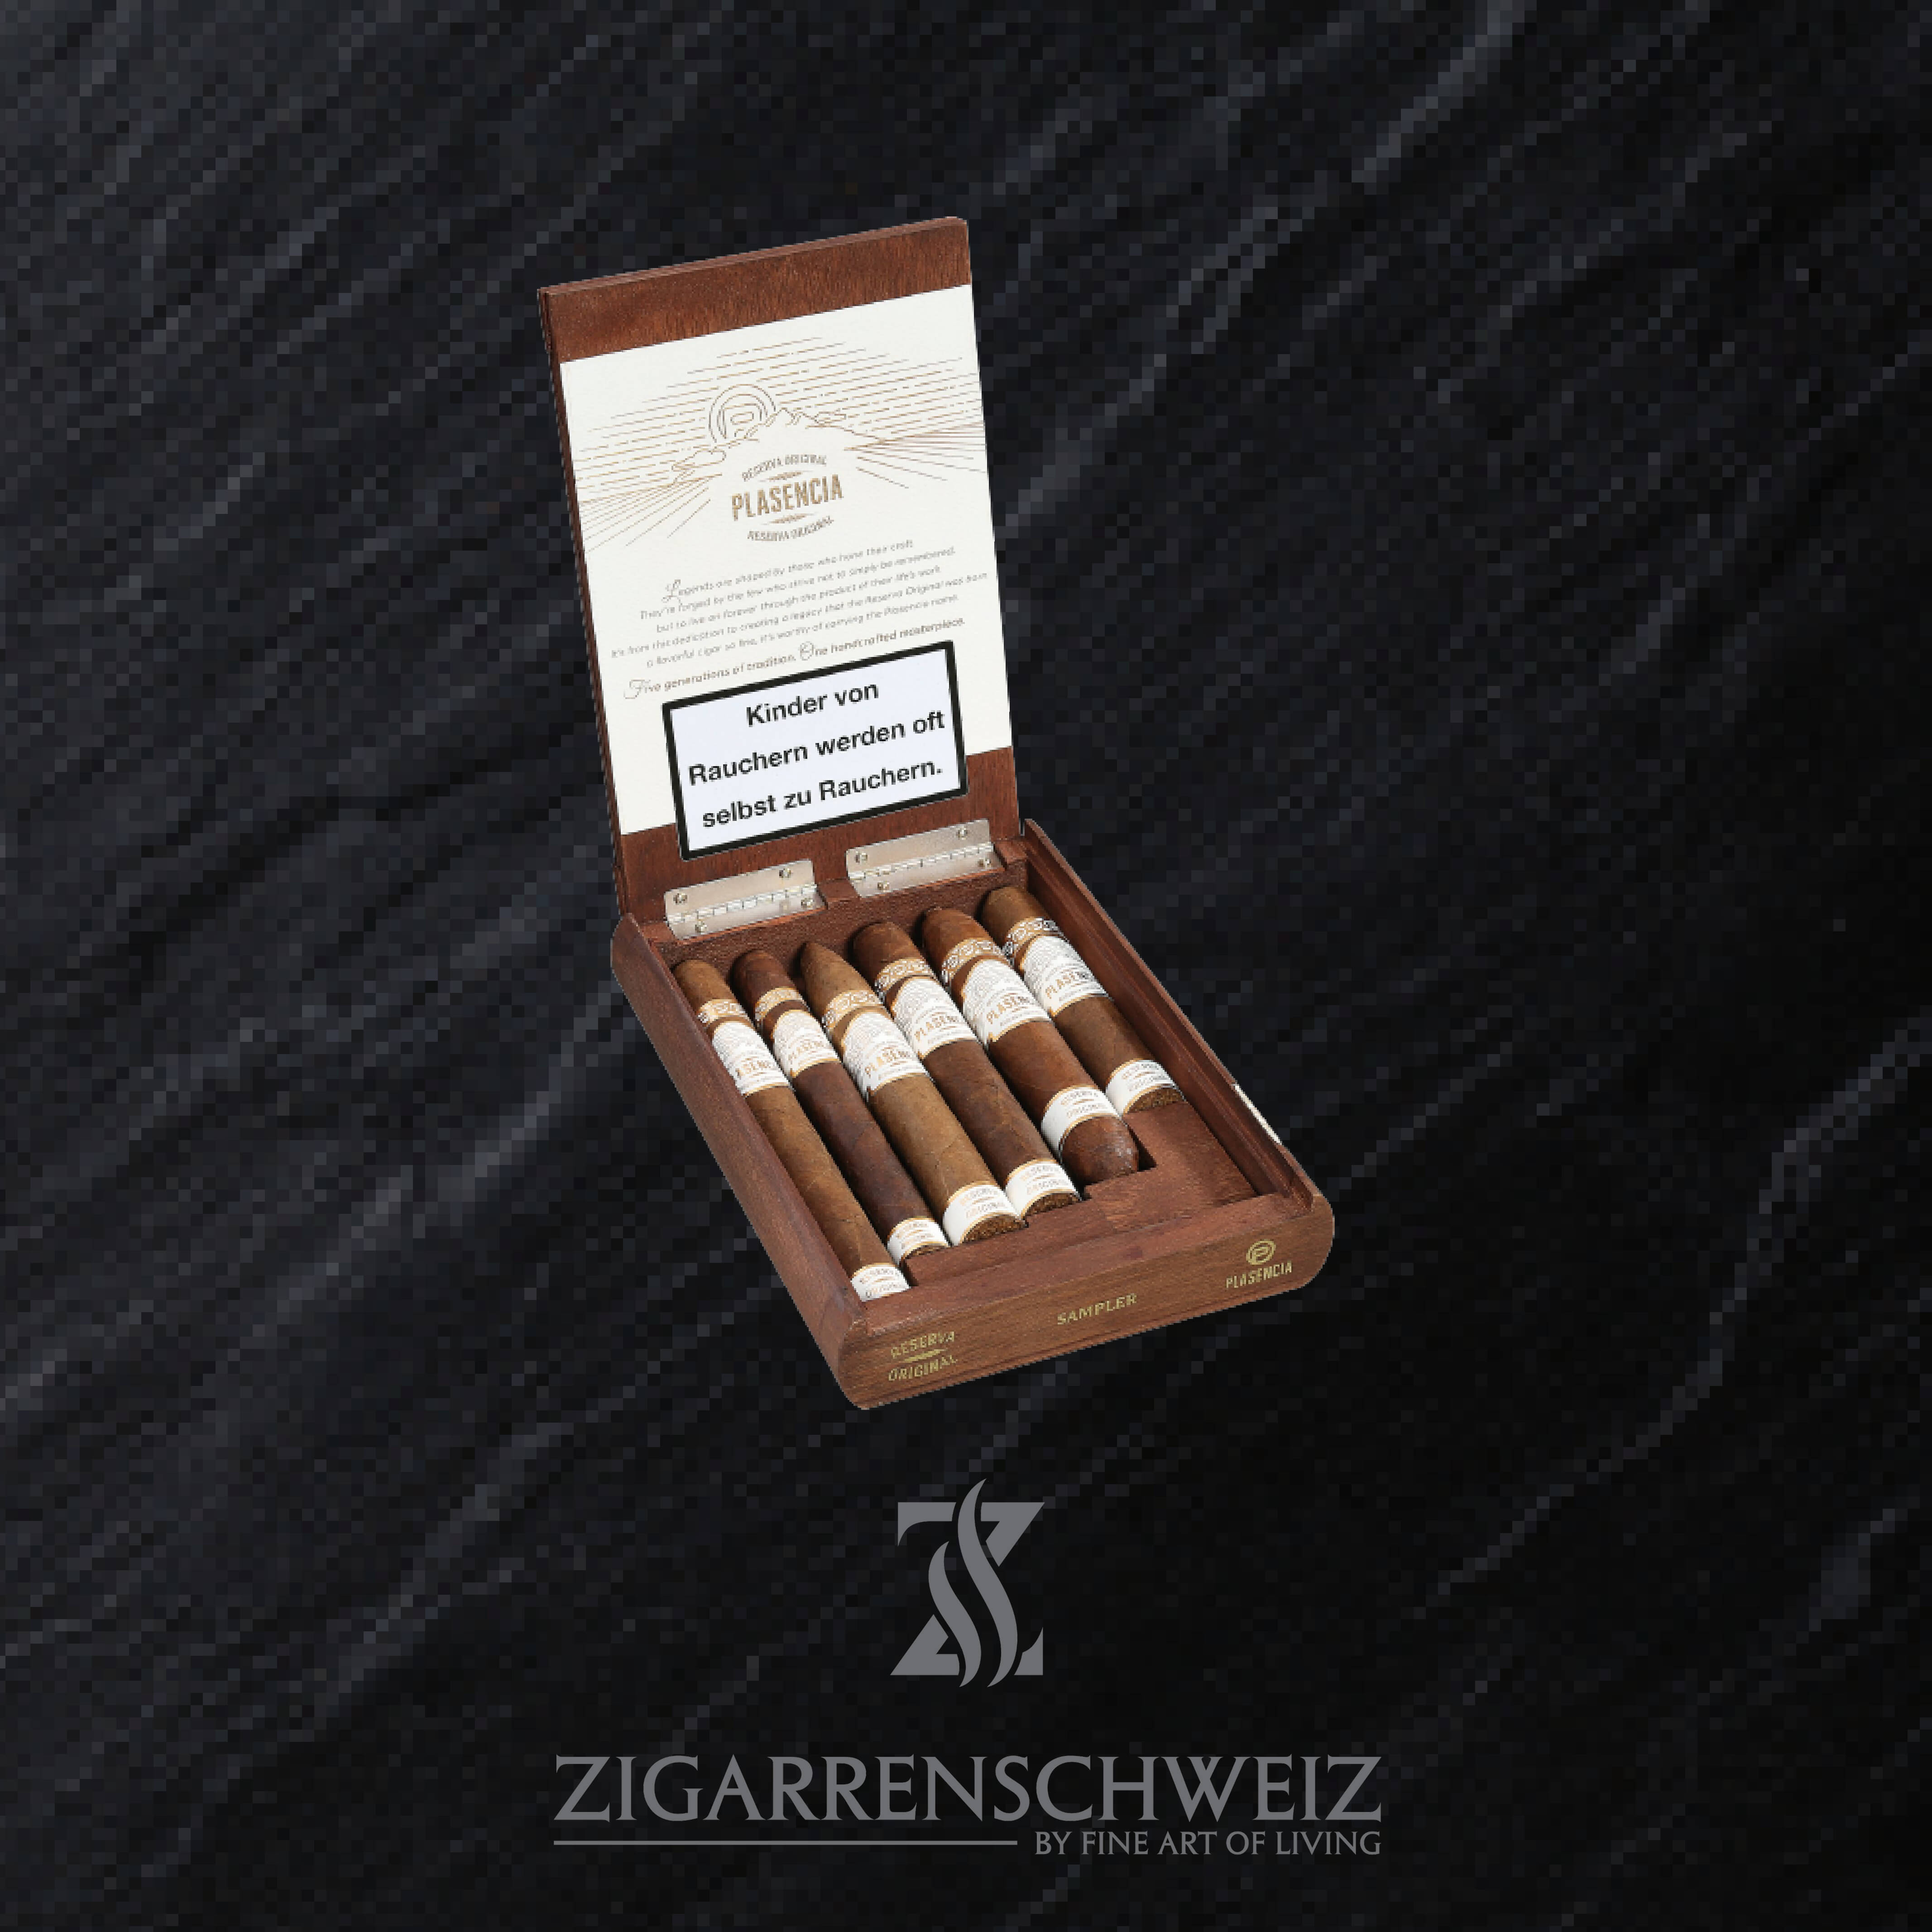 Plasencia Reserva Original Zigarren Sampler offen